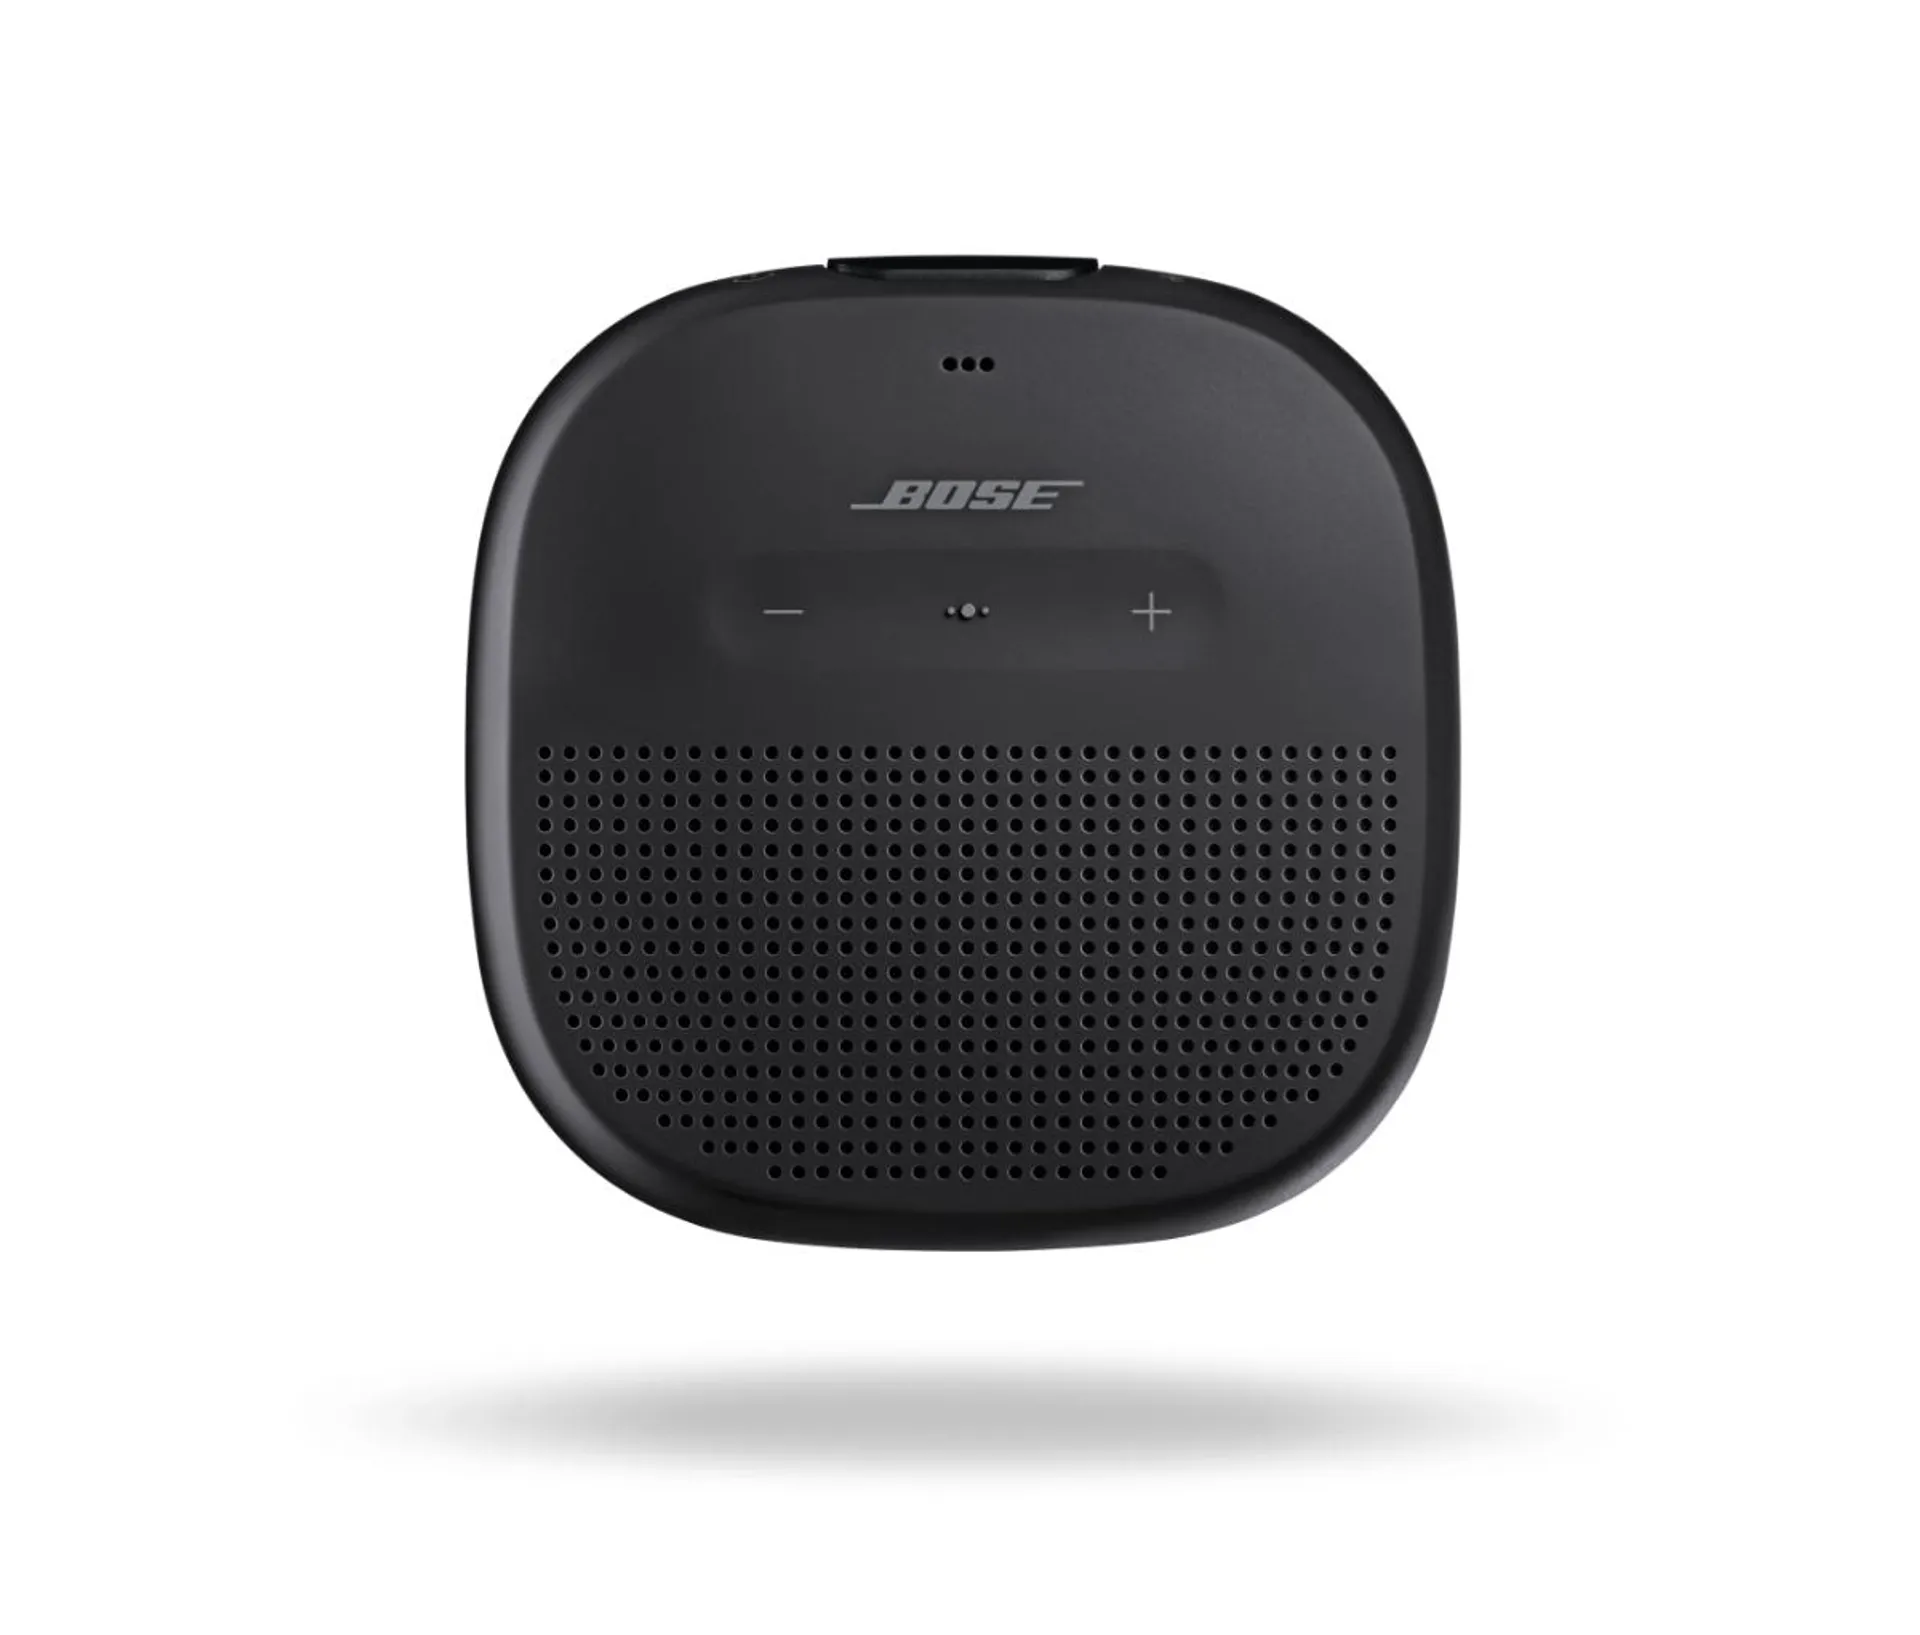 SoundLink Micro Bluetooth® speaker